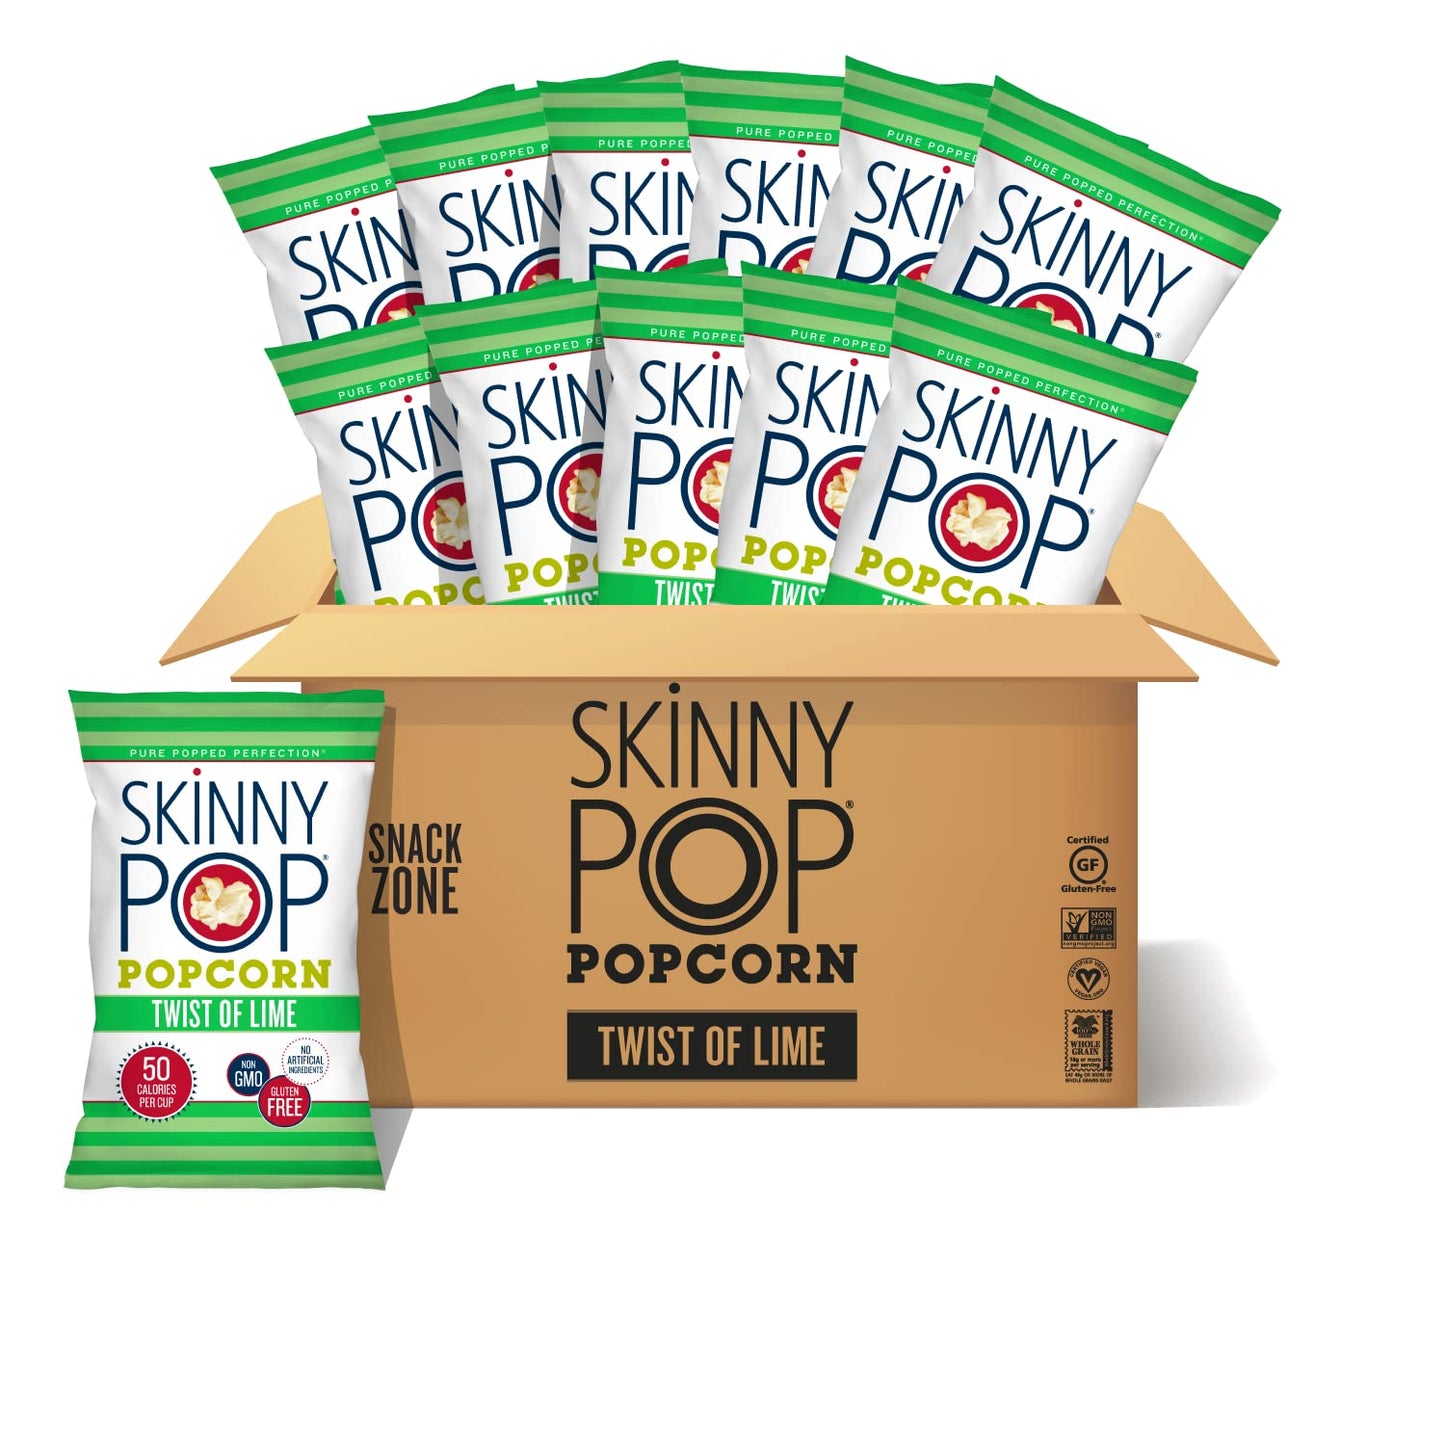 SkinnyPop Twist of Lime Popcorn, Gluten Free, Non-GMO, Healthy Popcorn Snacks, Easter Snacks, Skinny Pop 4.4oz Grocery Size Bags (12 Count)